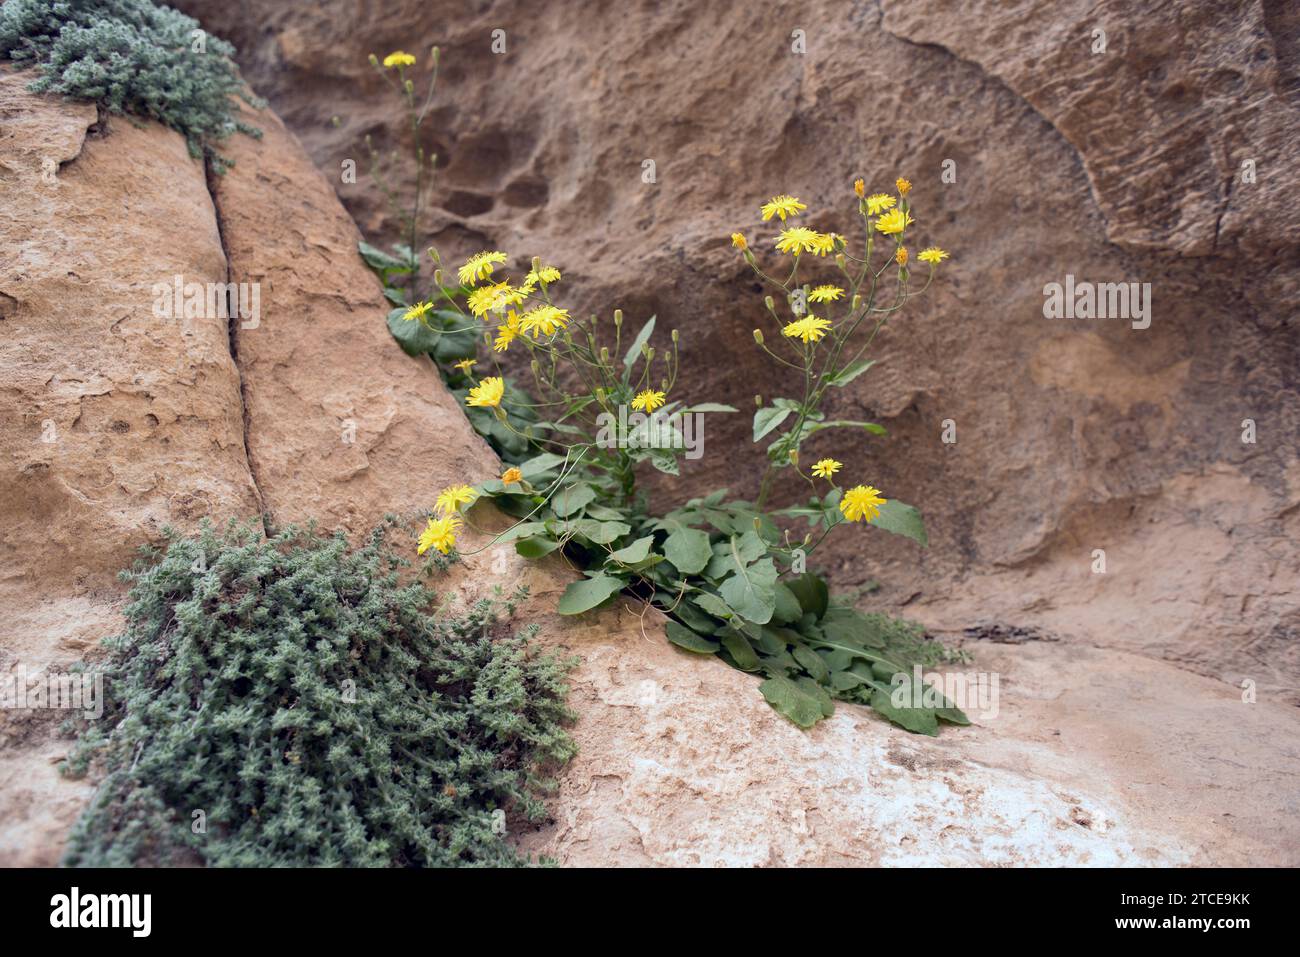 Uñas del diablo (Rhagadiolus stellatus) is an annual plant native to Mediterranean basin. This photo was taken in Petra, Jordan. Stock Photo